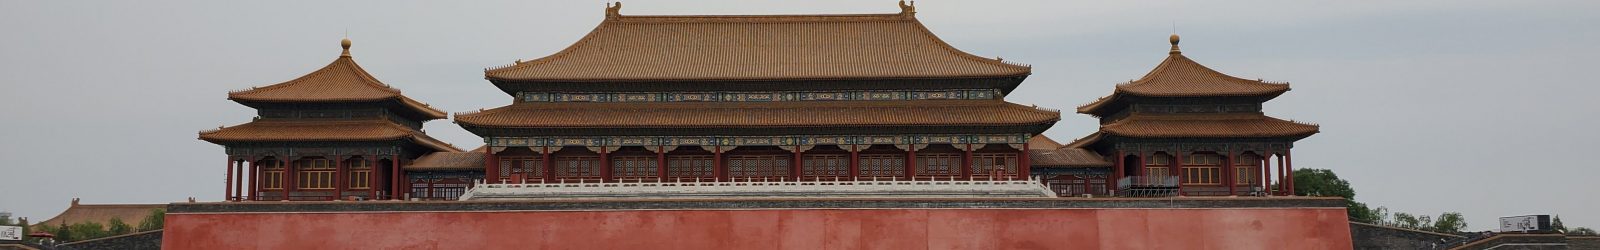 International Business Seminars - The Language Barrier in China